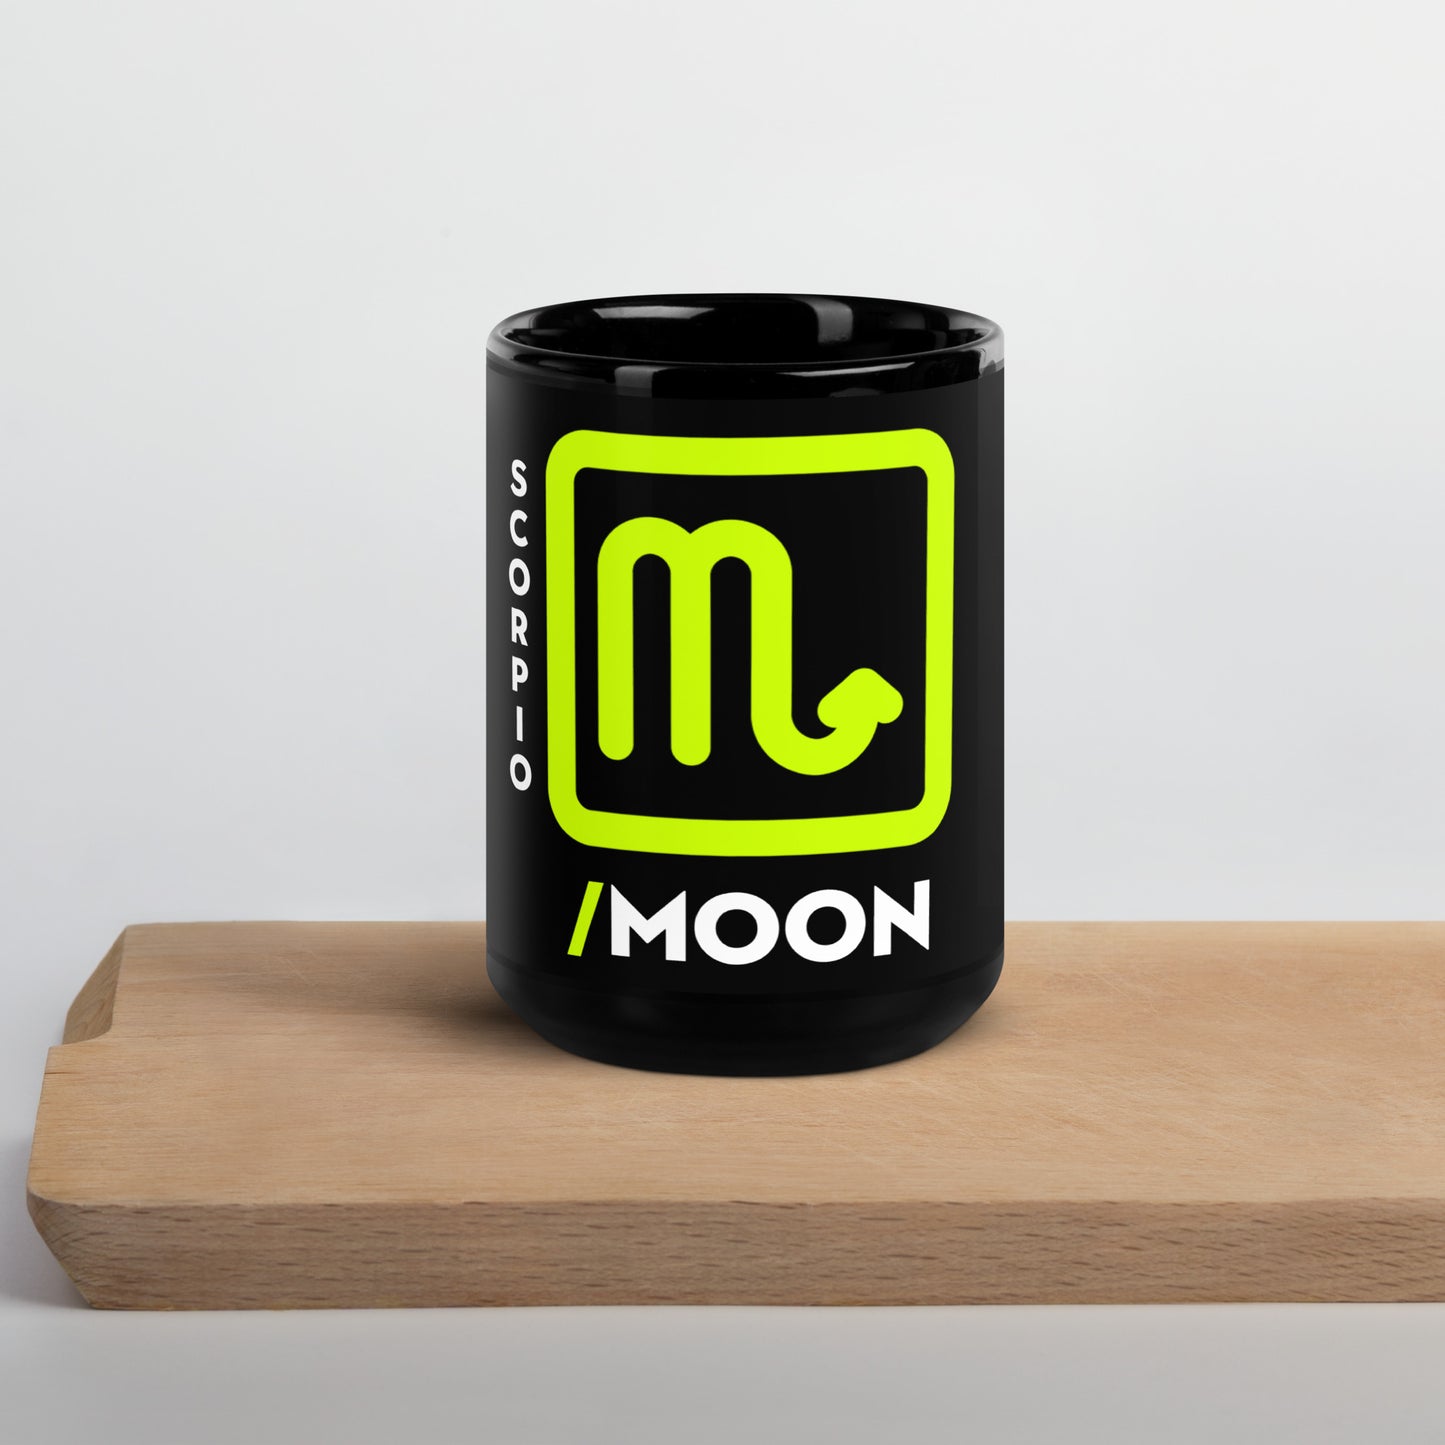 111 LIFE - SCORPIO MOON ZODIAC - Black Glossy Mug